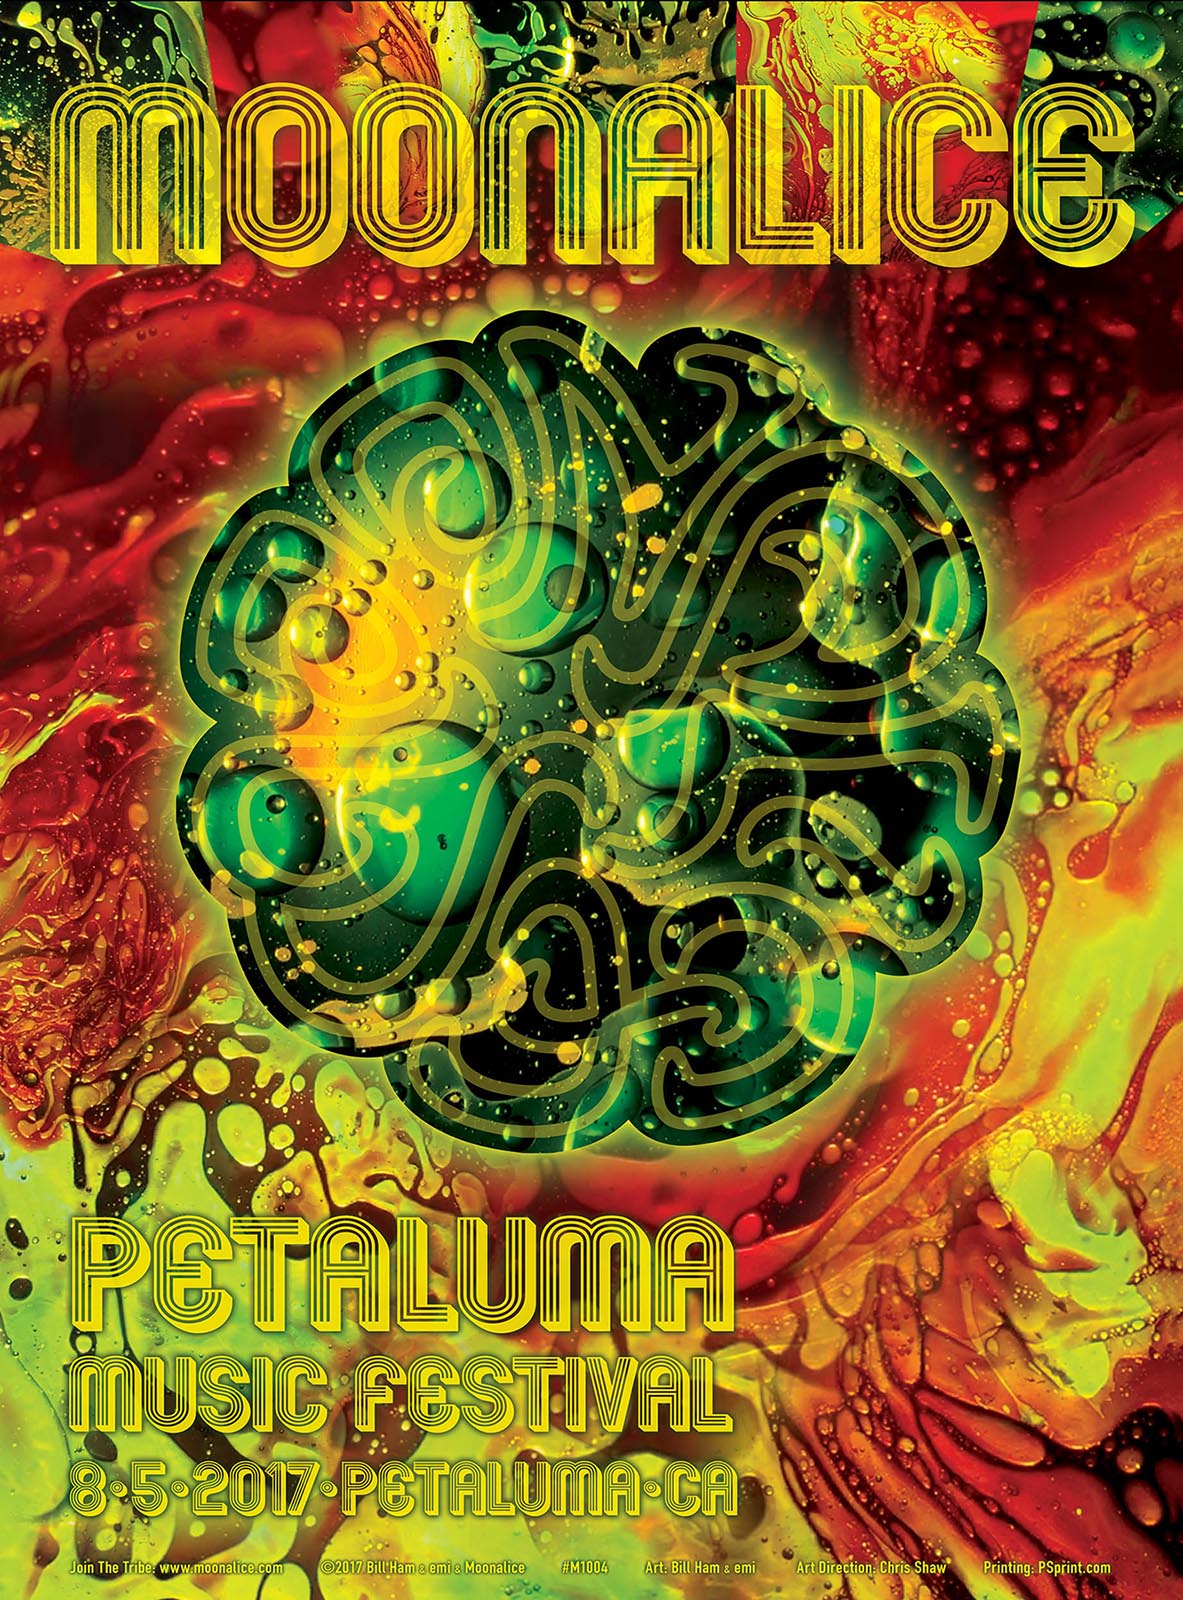 Moonalice poster for Petaluma Music Festival 2017, design by emi